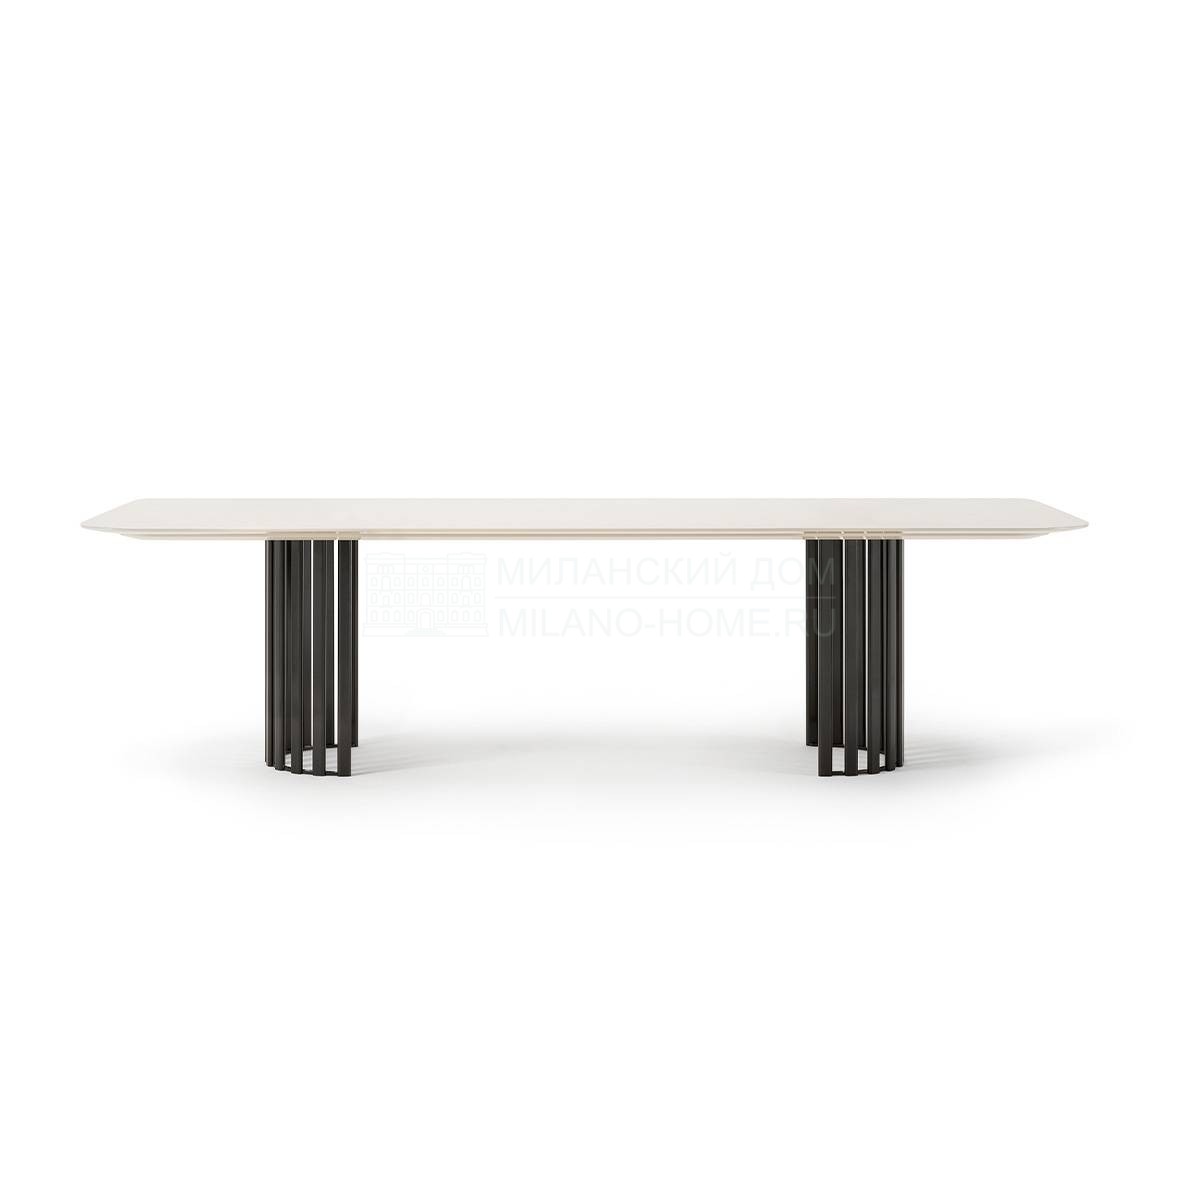 Обеденный стол Roma rectangular table из Италии фабрики TURRI